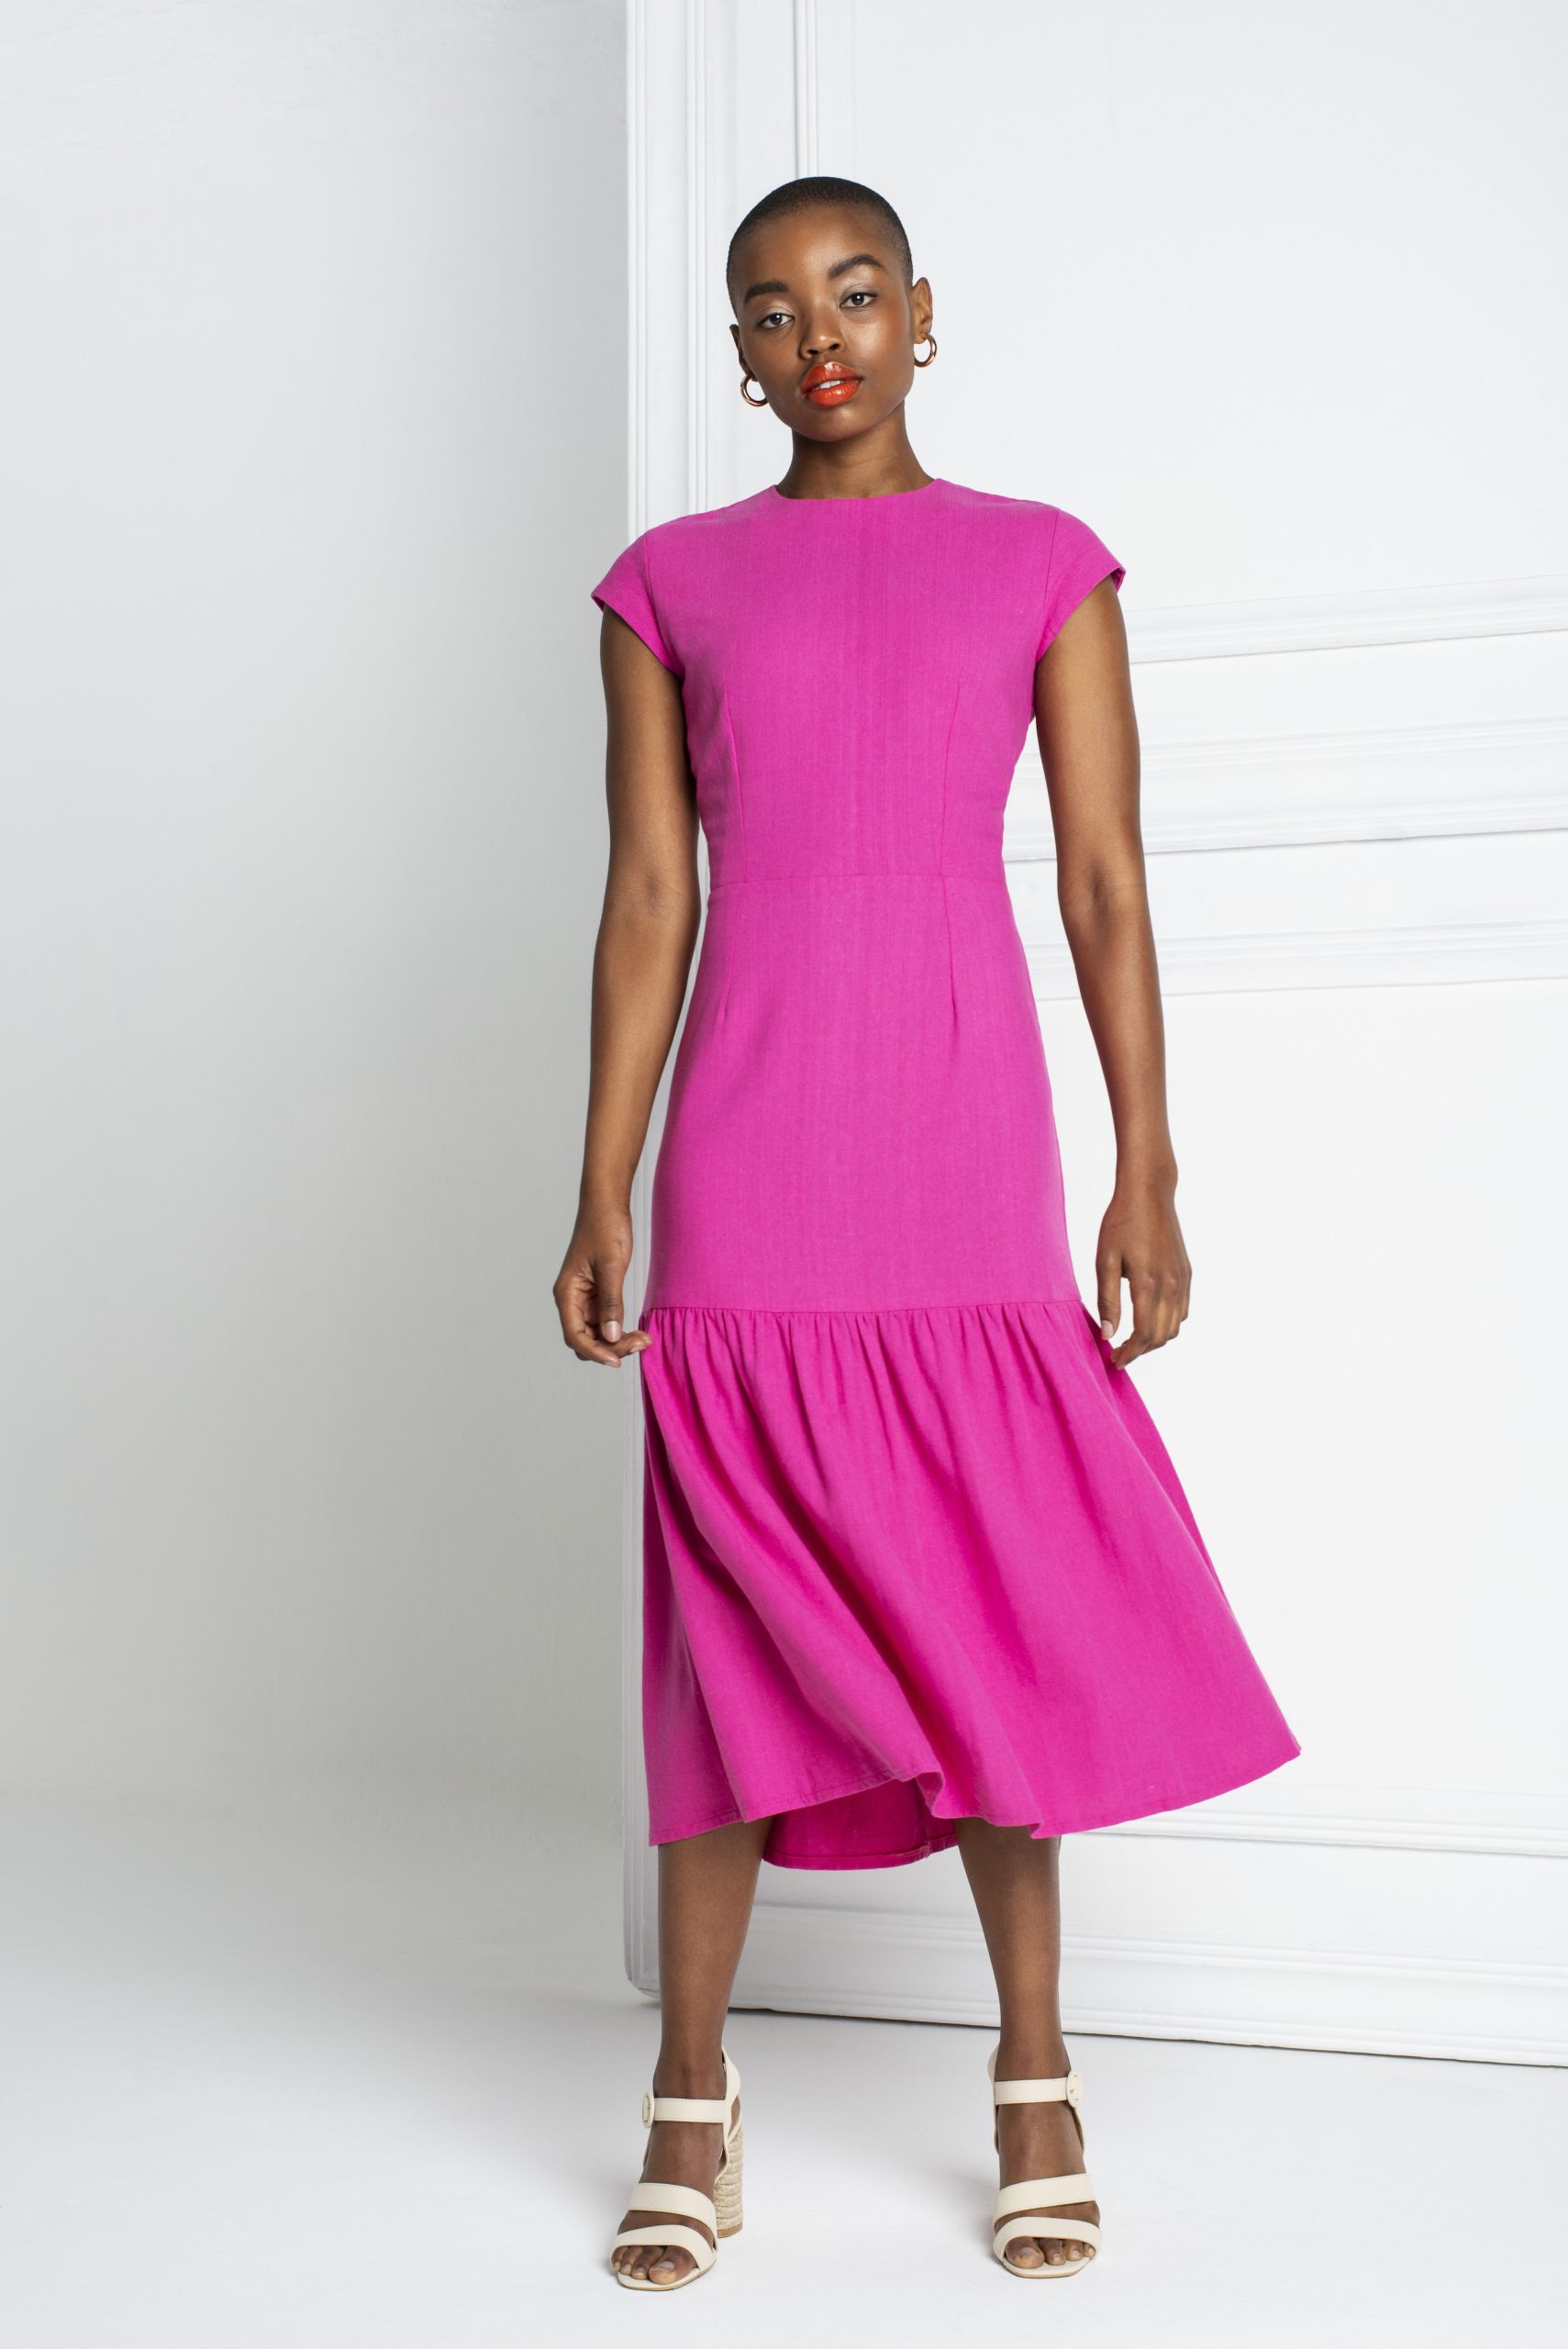 Simplicity Dress S8875 - The Fold Line